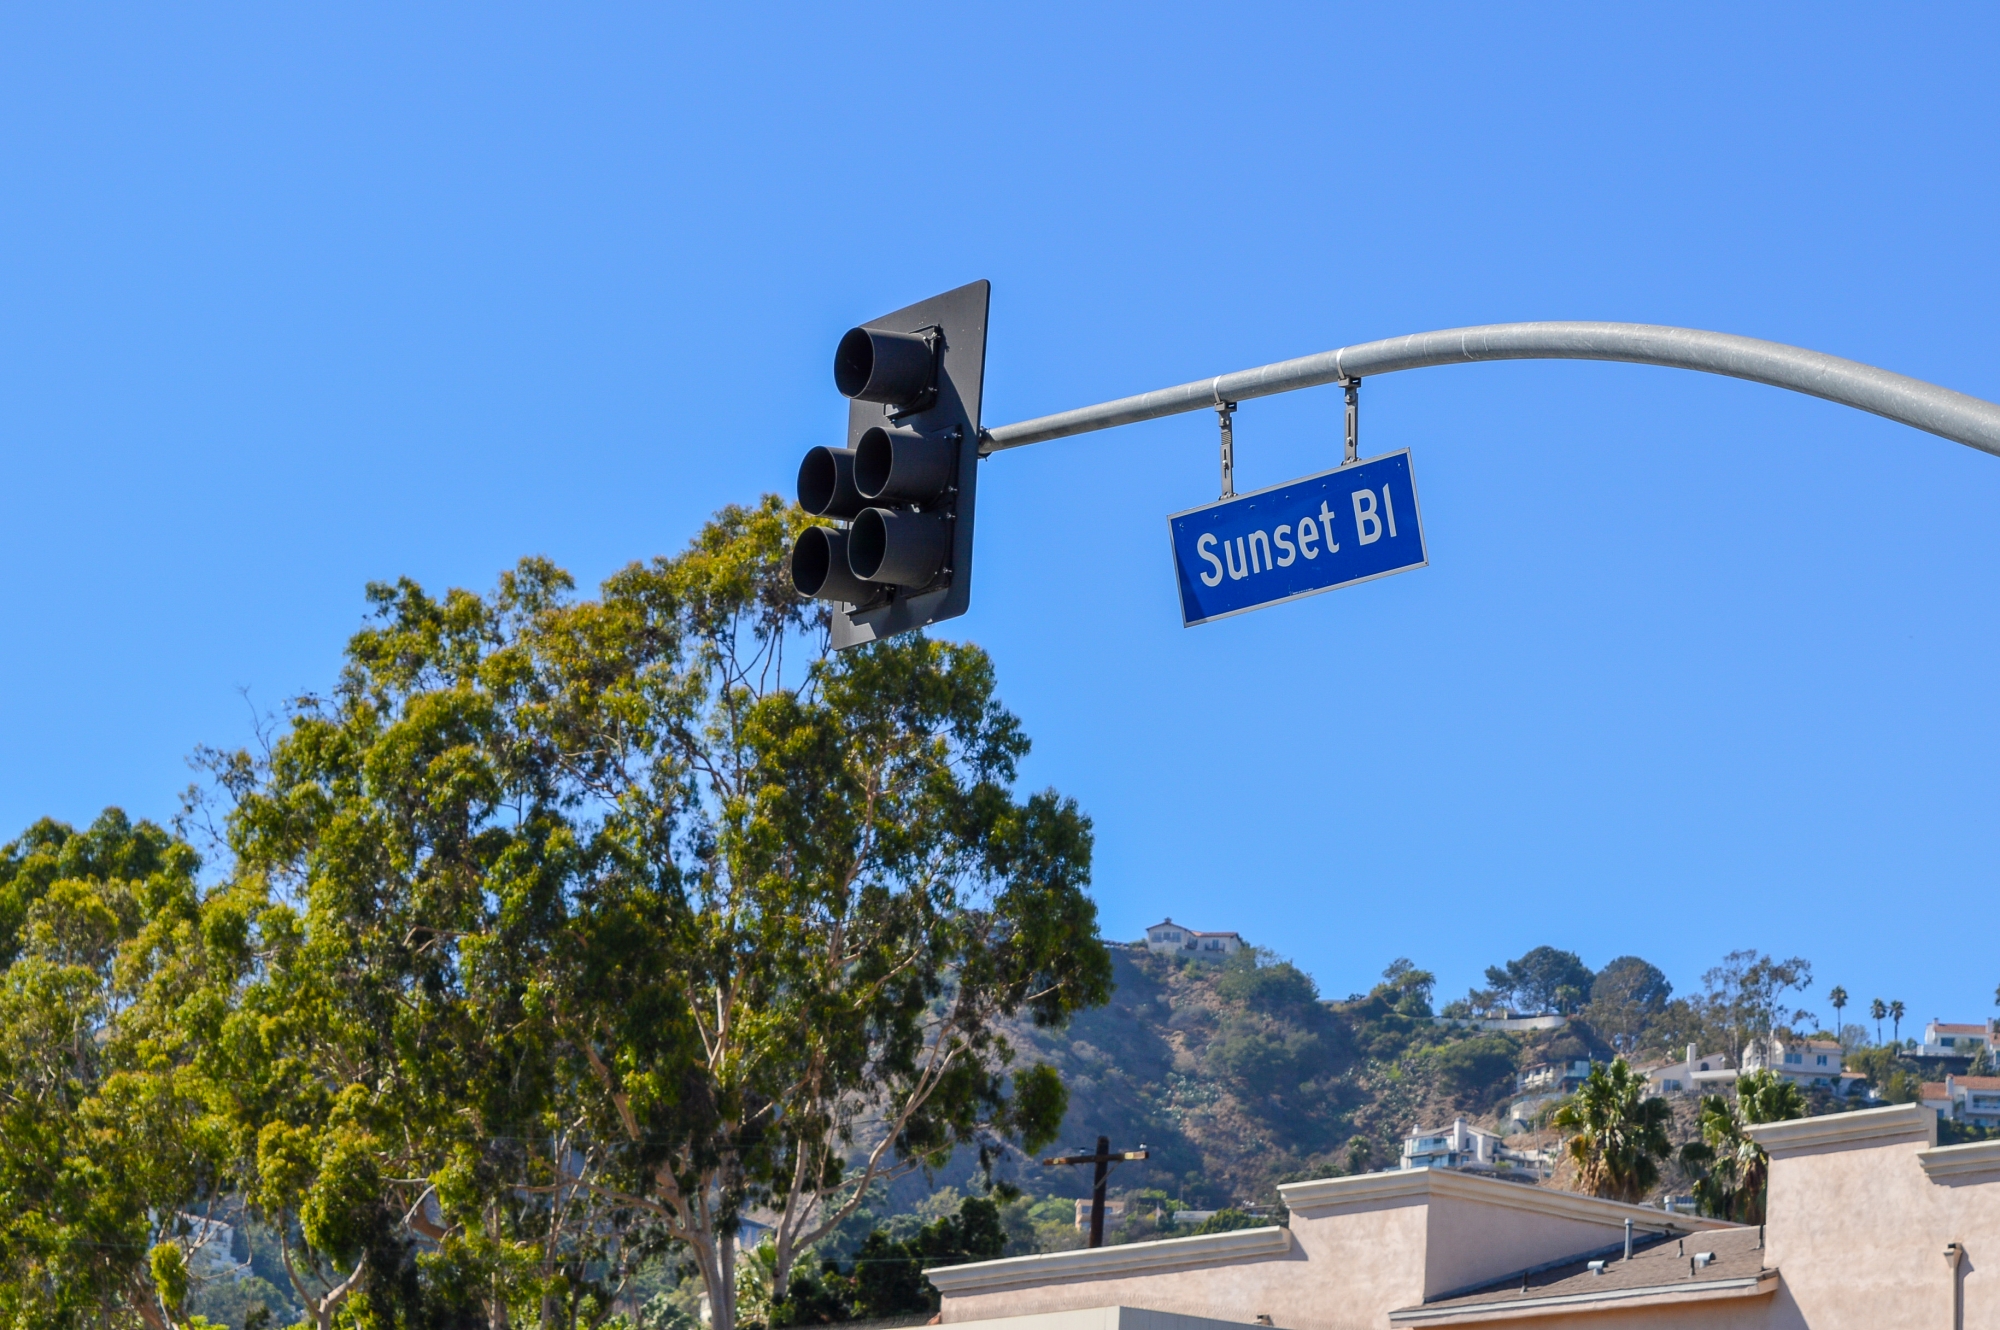 Sunset Boulevard, Los Angeles